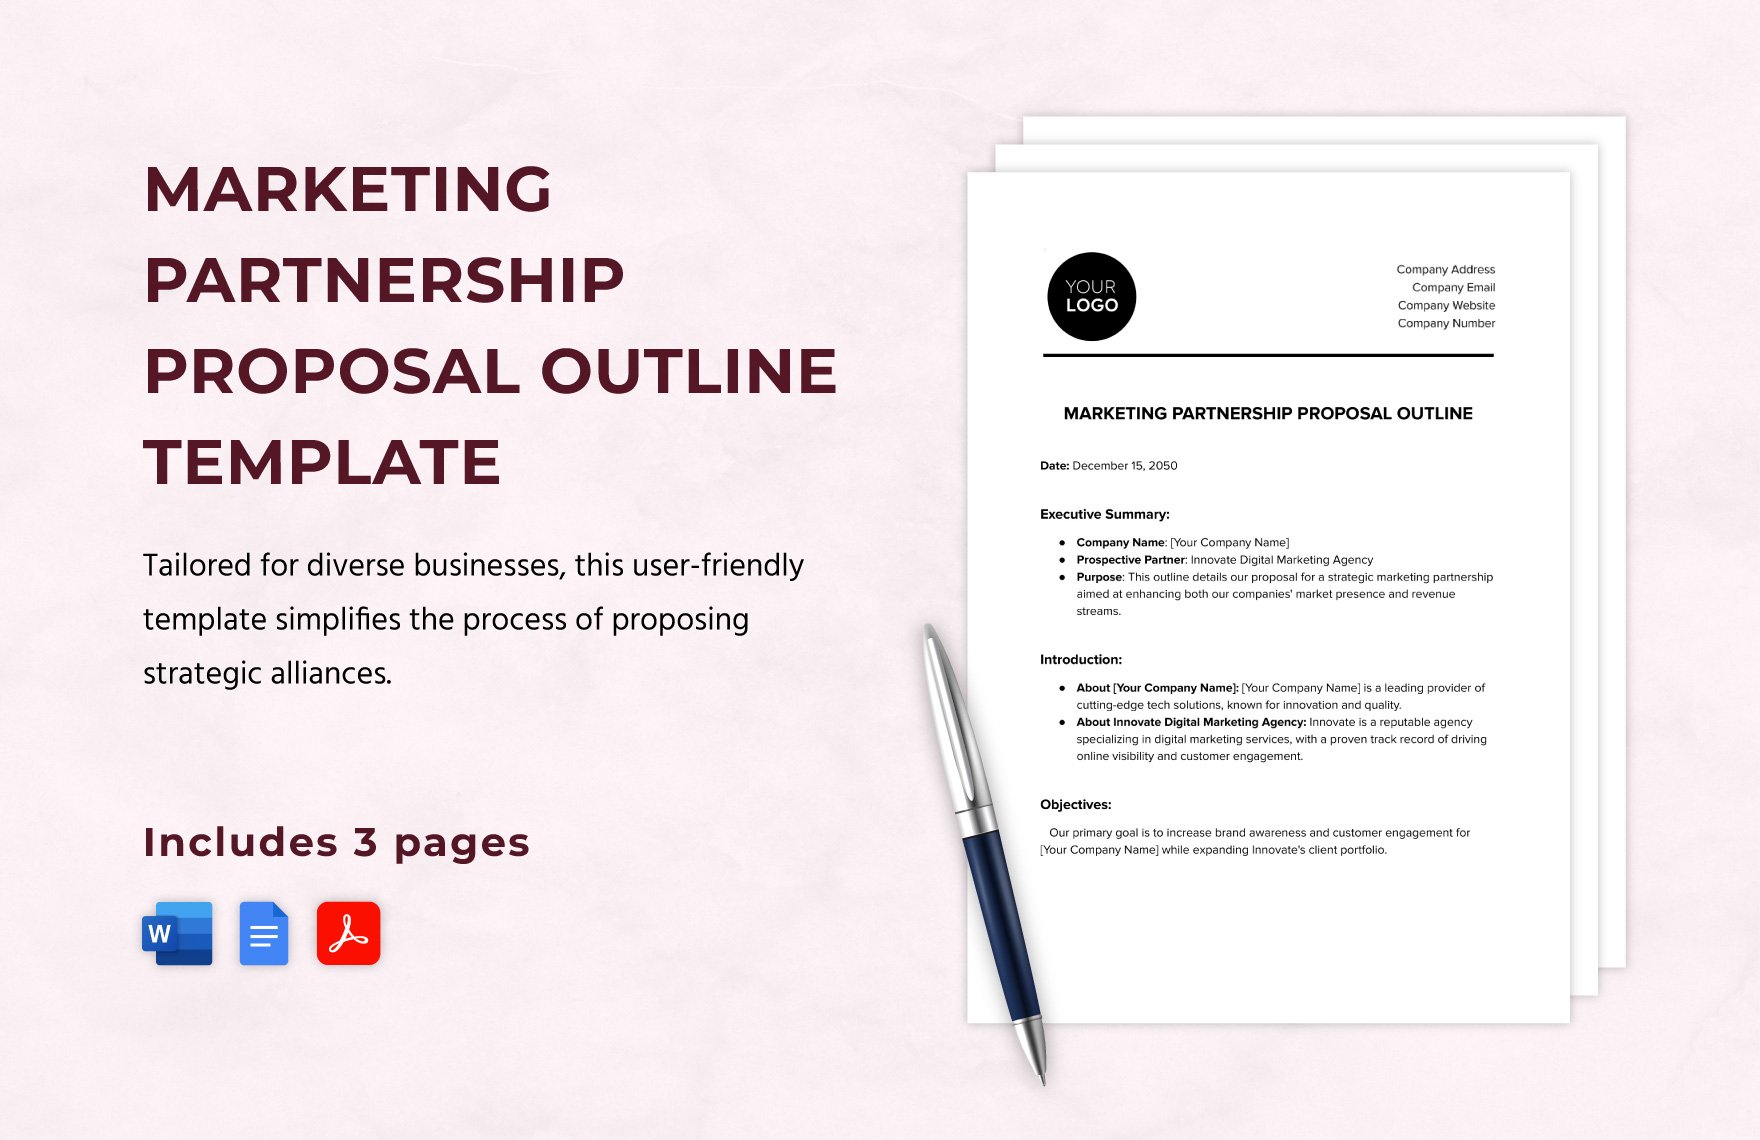 Marketing Partnership Proposal Outline Template in Word, Google Docs, PDF